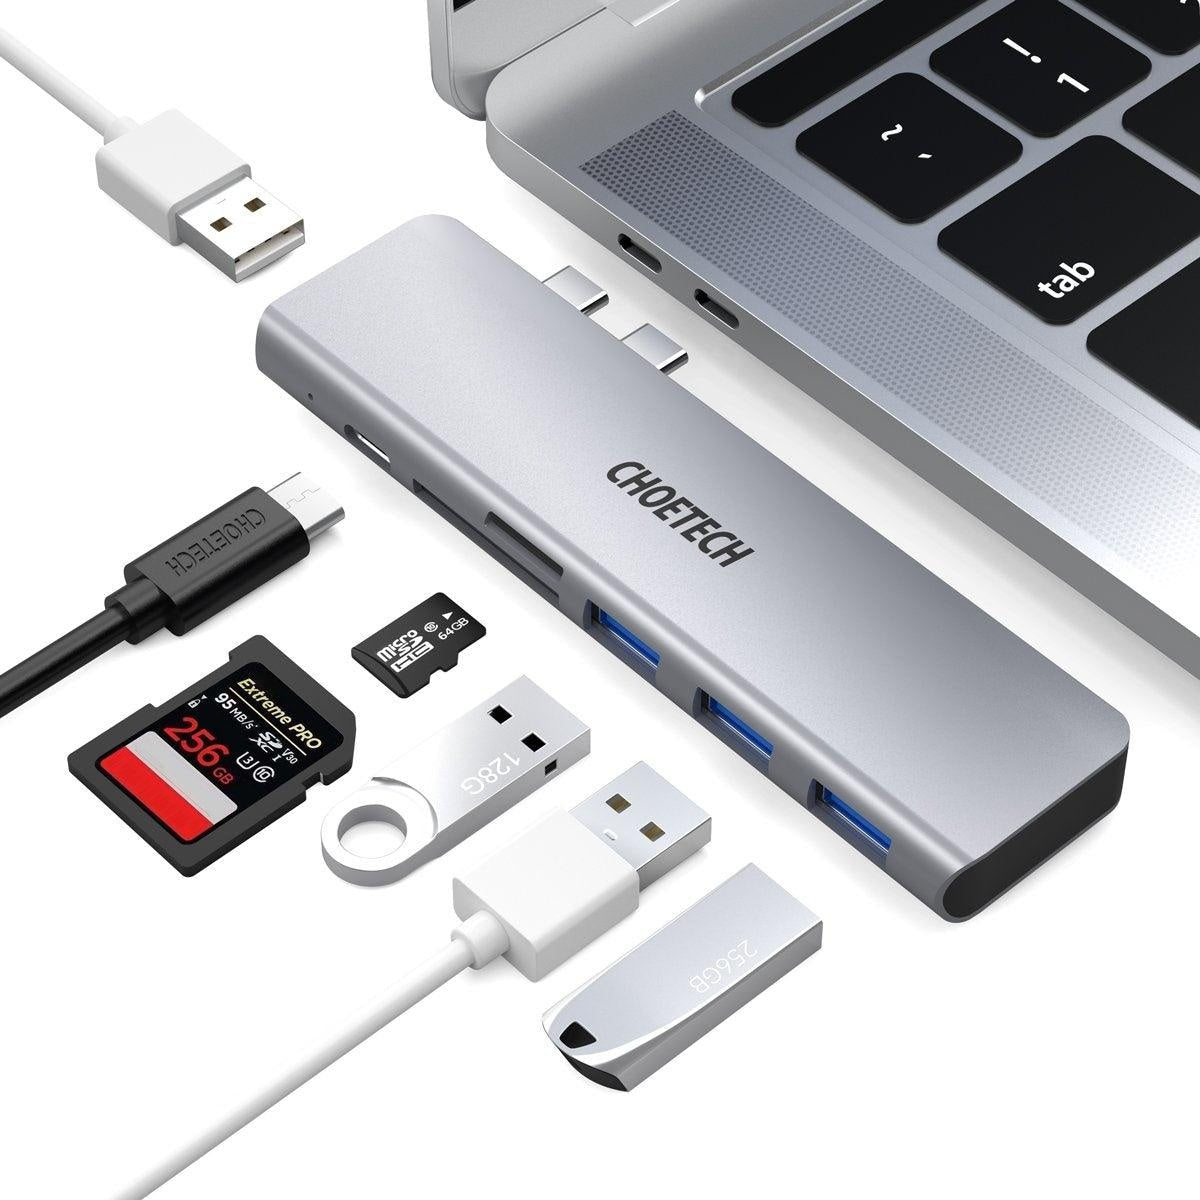 CHOETECH HUB-M23 7-in-1 MacBook Pro USB Adapter Deals499